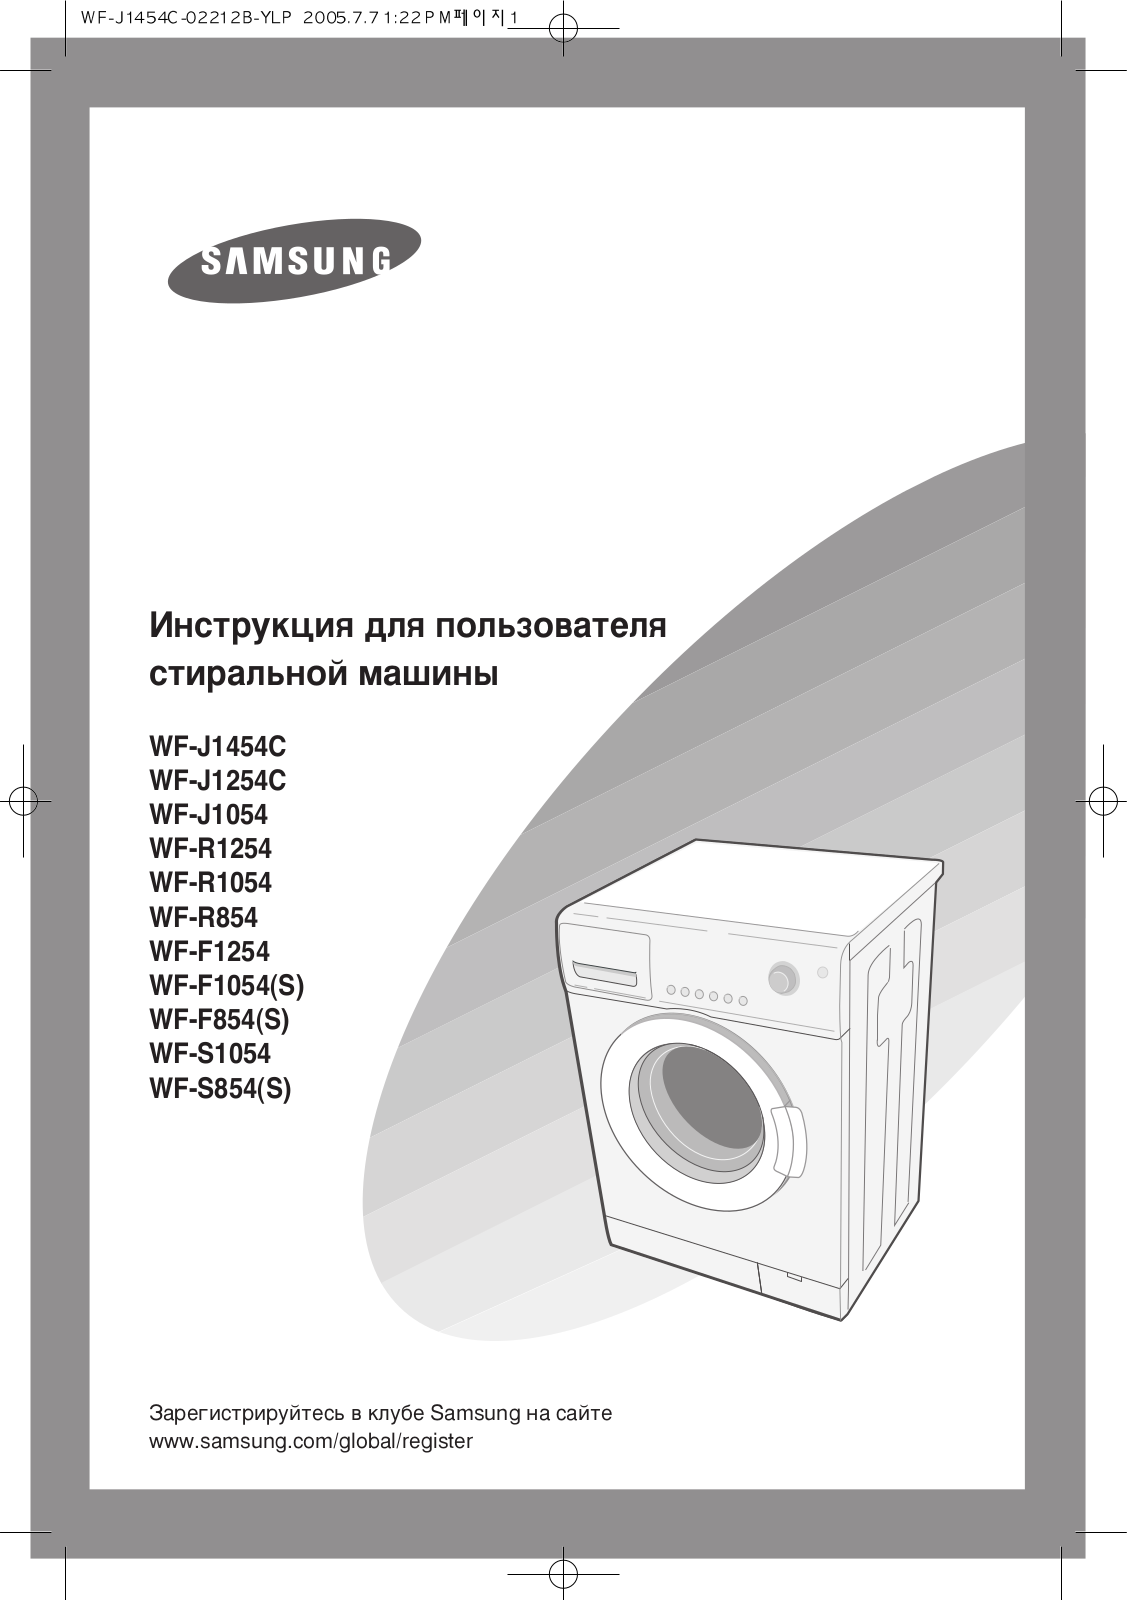 Samsung WF-J1254C User Manual